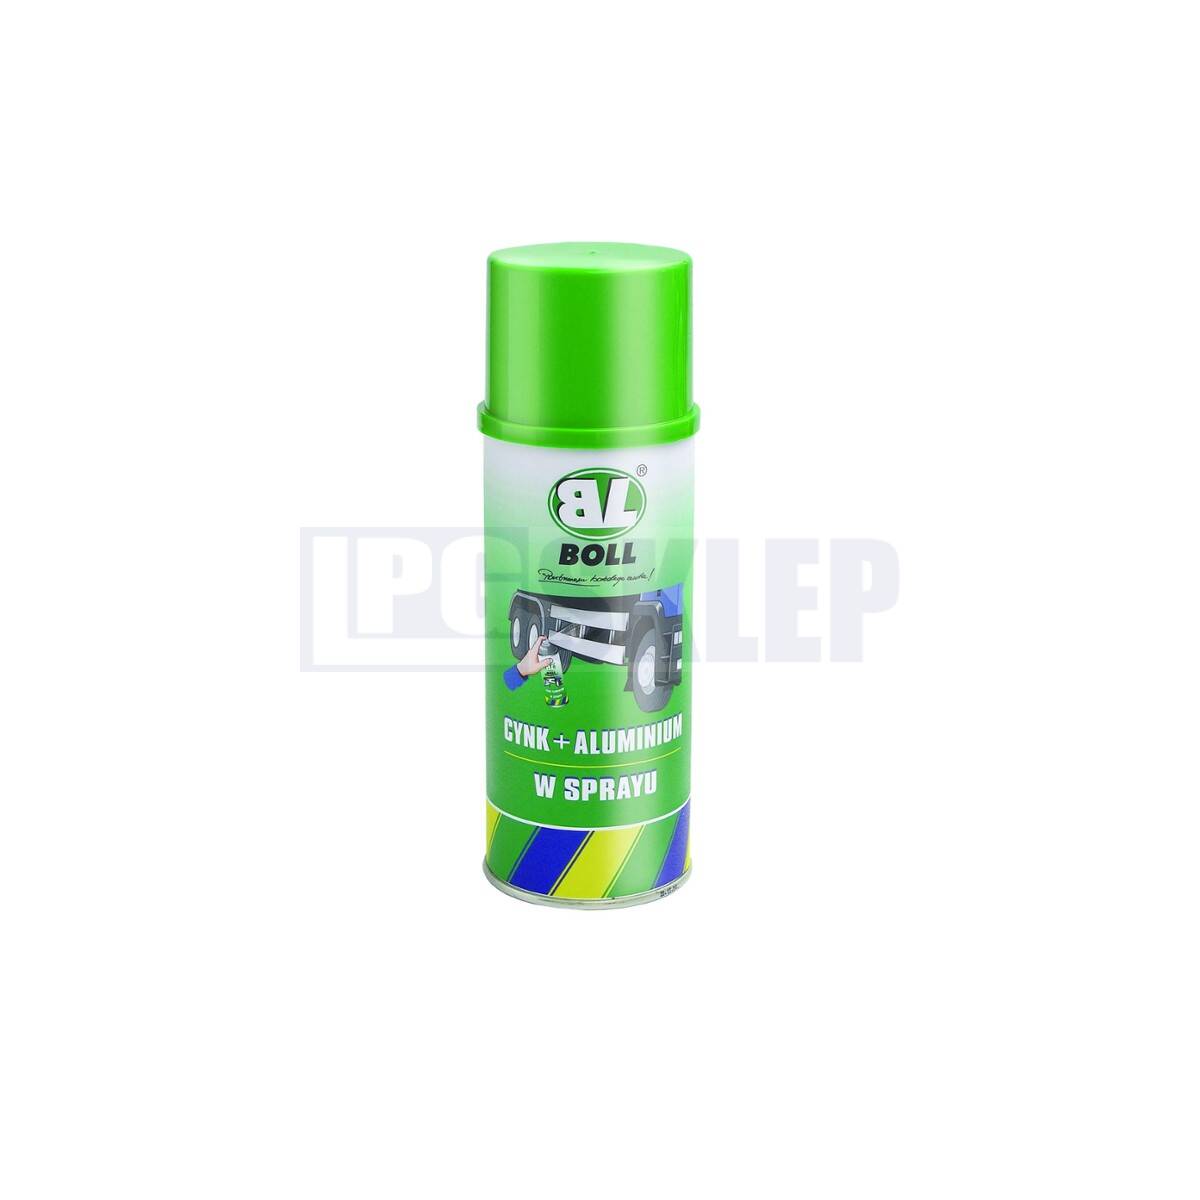 BOLL Cynk + aluminium - spray 400 ml (Фото 1)